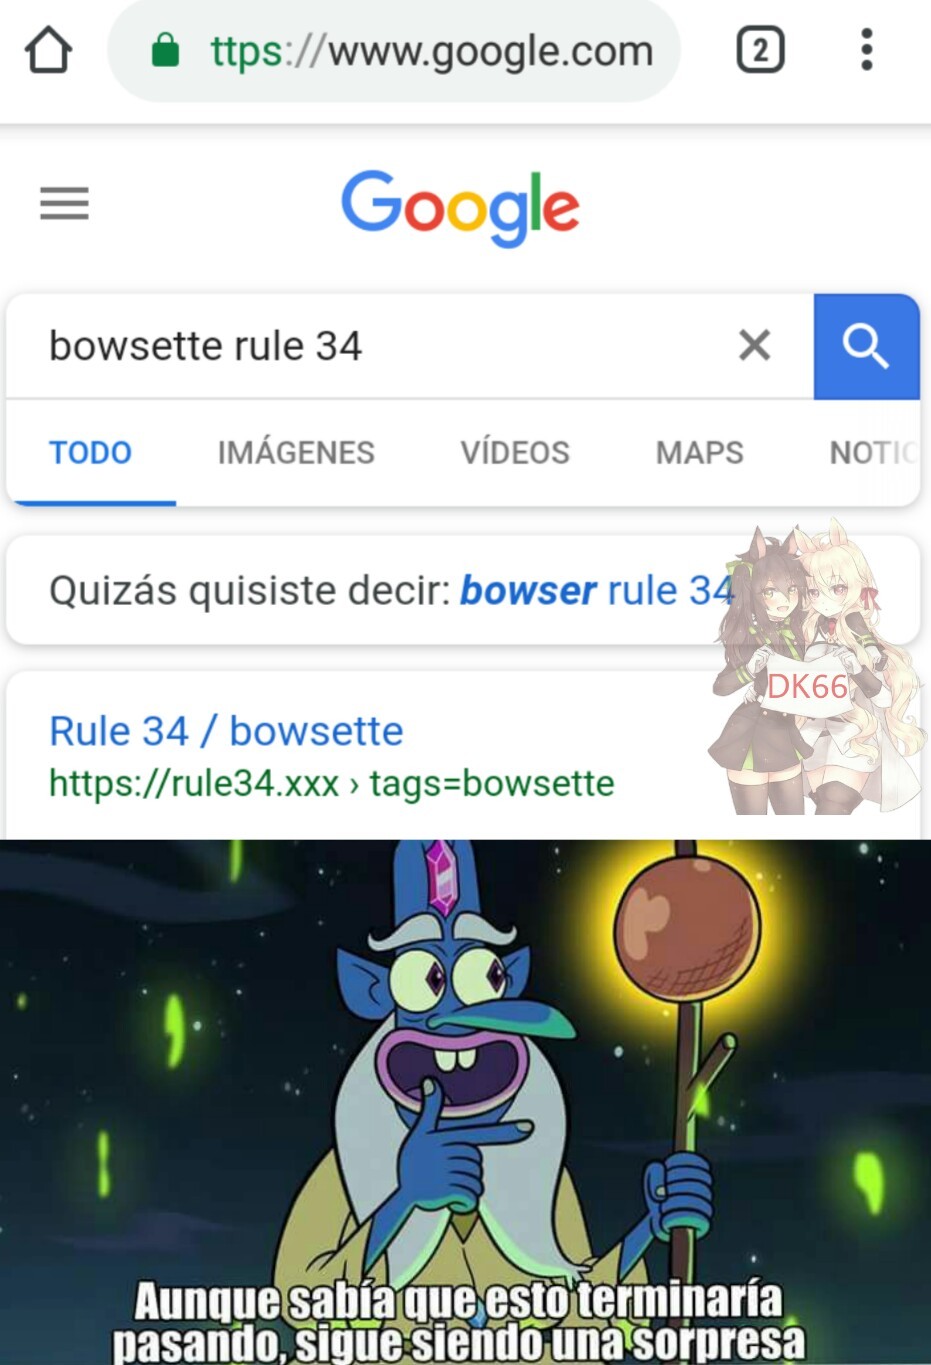 Bowsette=Bowser mujer - meme